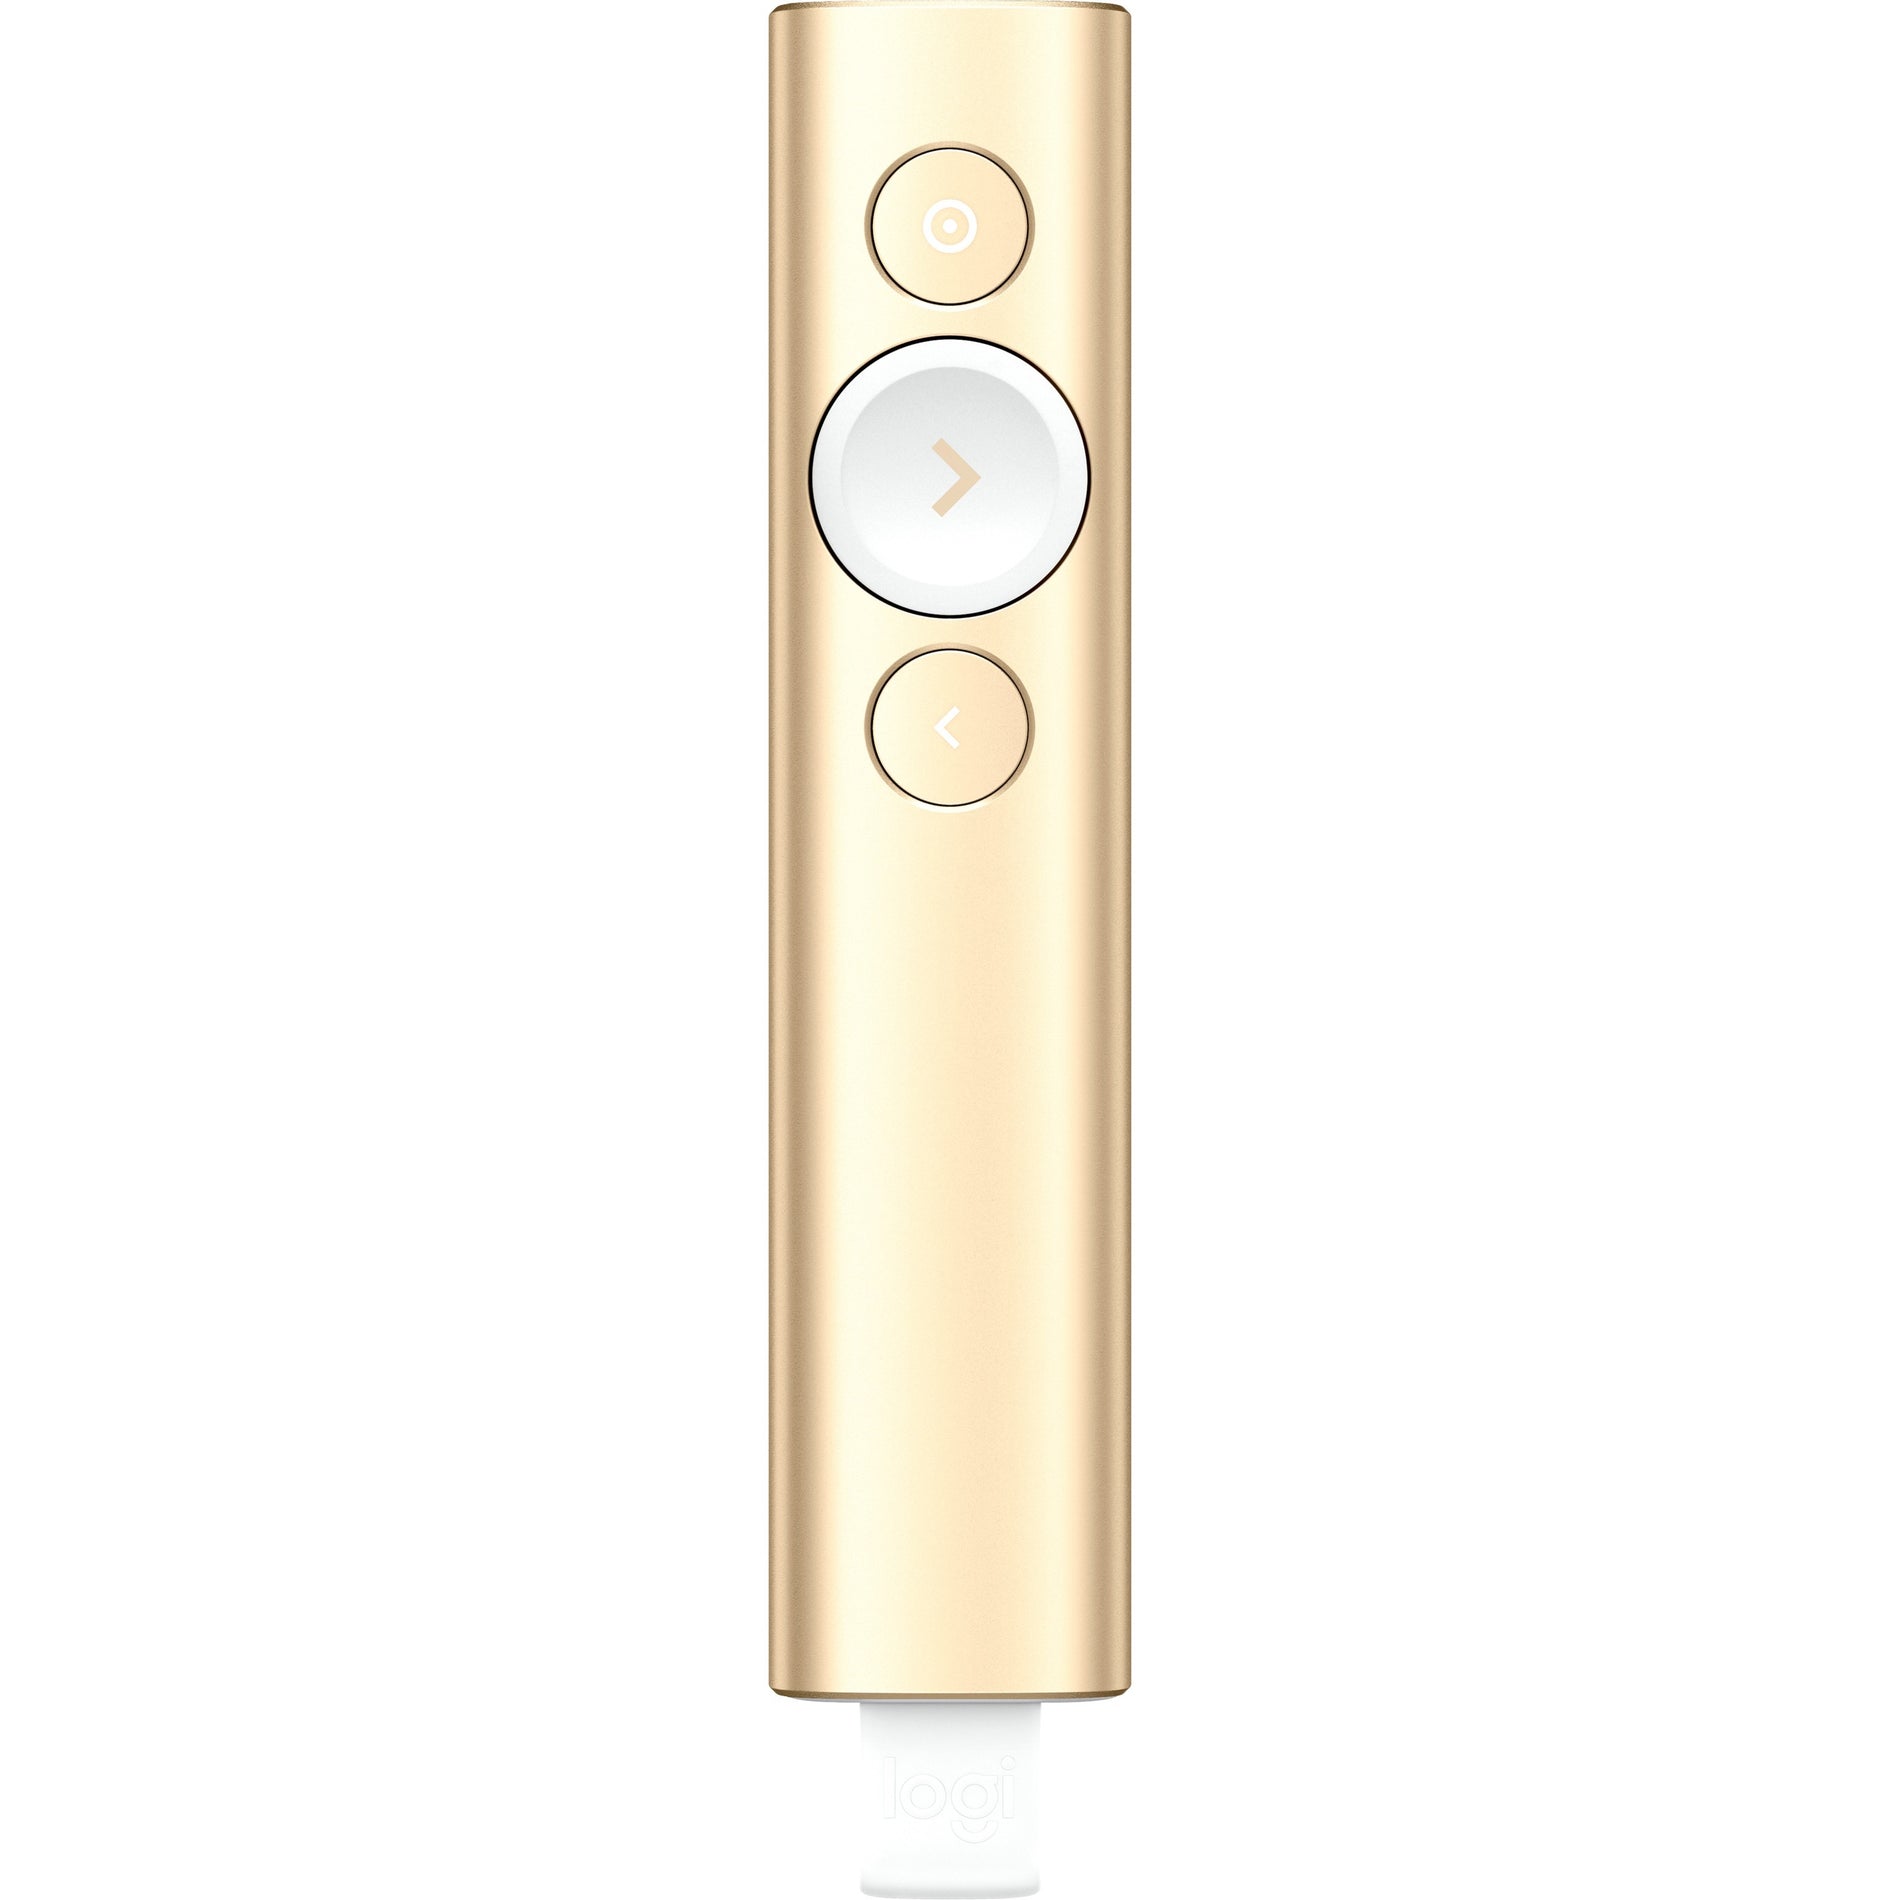 Logitech 910-004860 Spotlight Universal Remote Control, Wireless Bluetooth, 98.43 ft Operating Distance, Gold